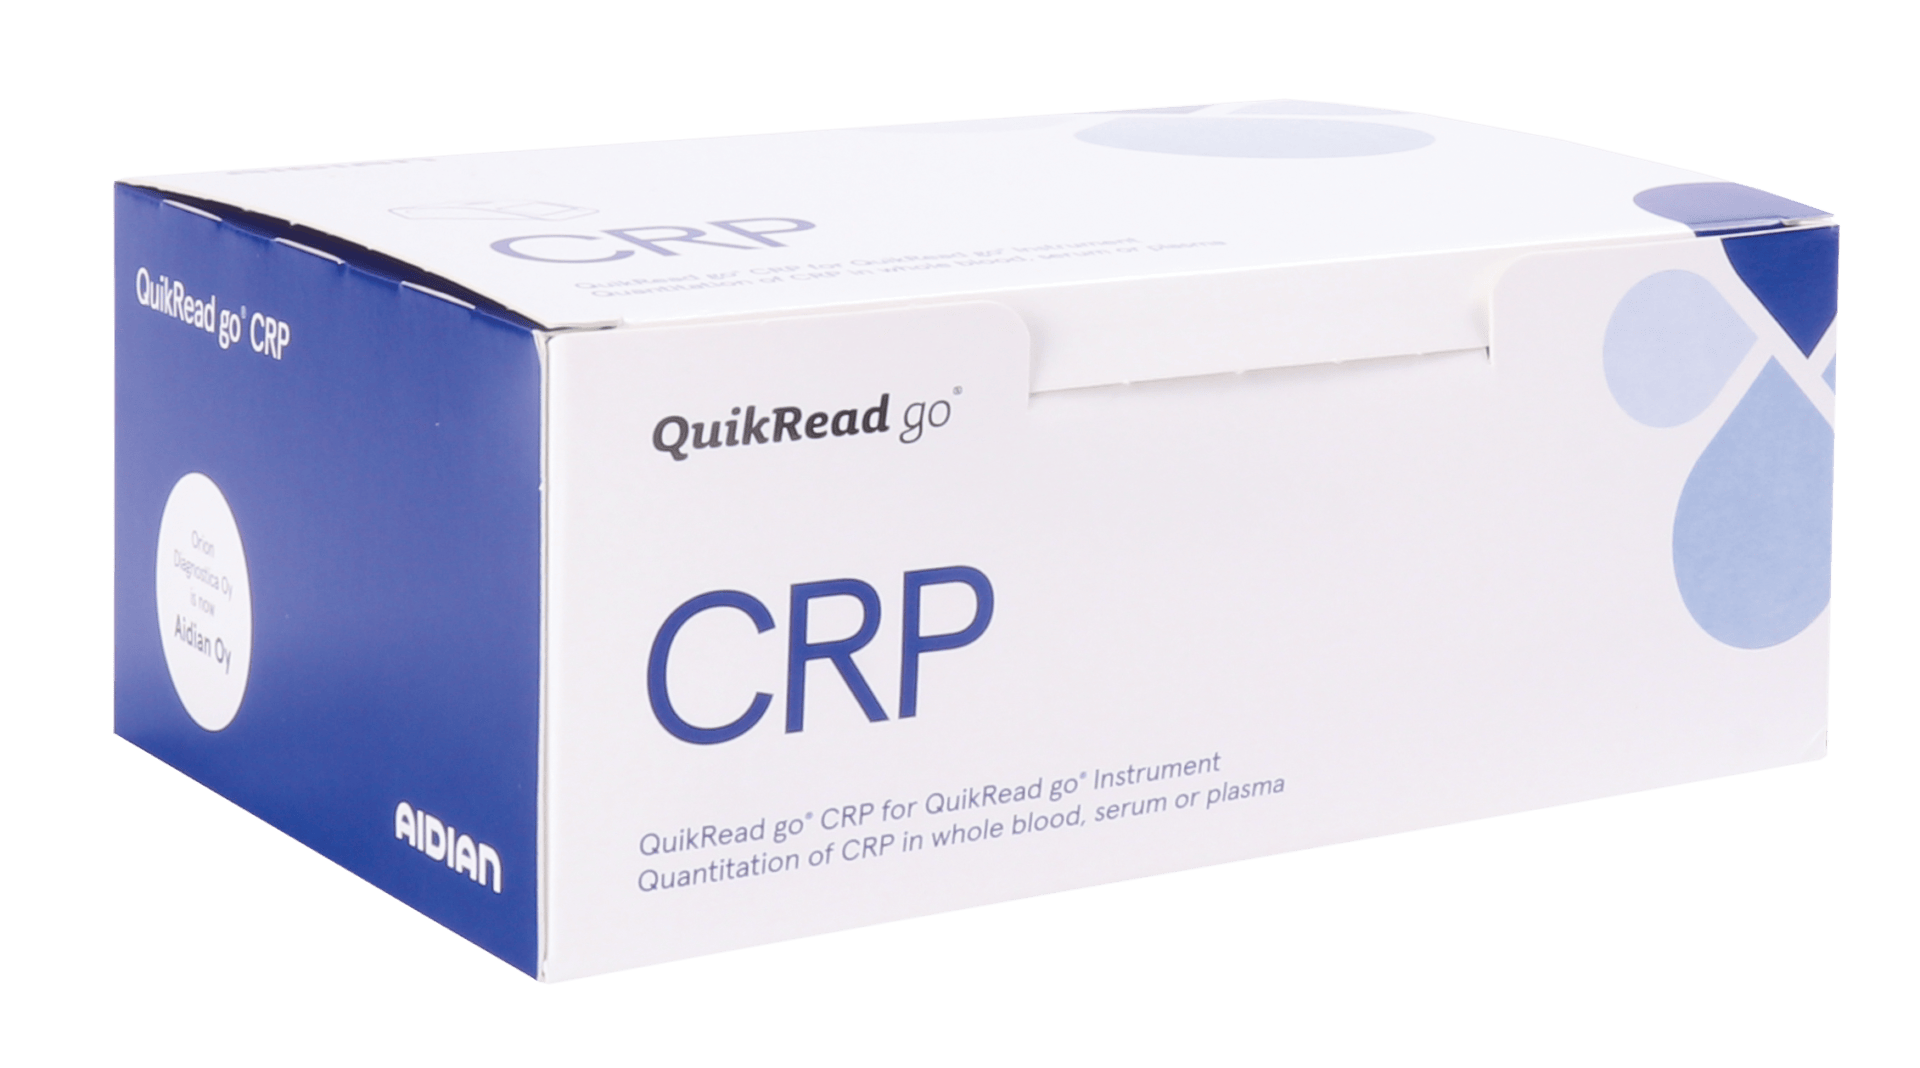 QuikRead go CRP tests